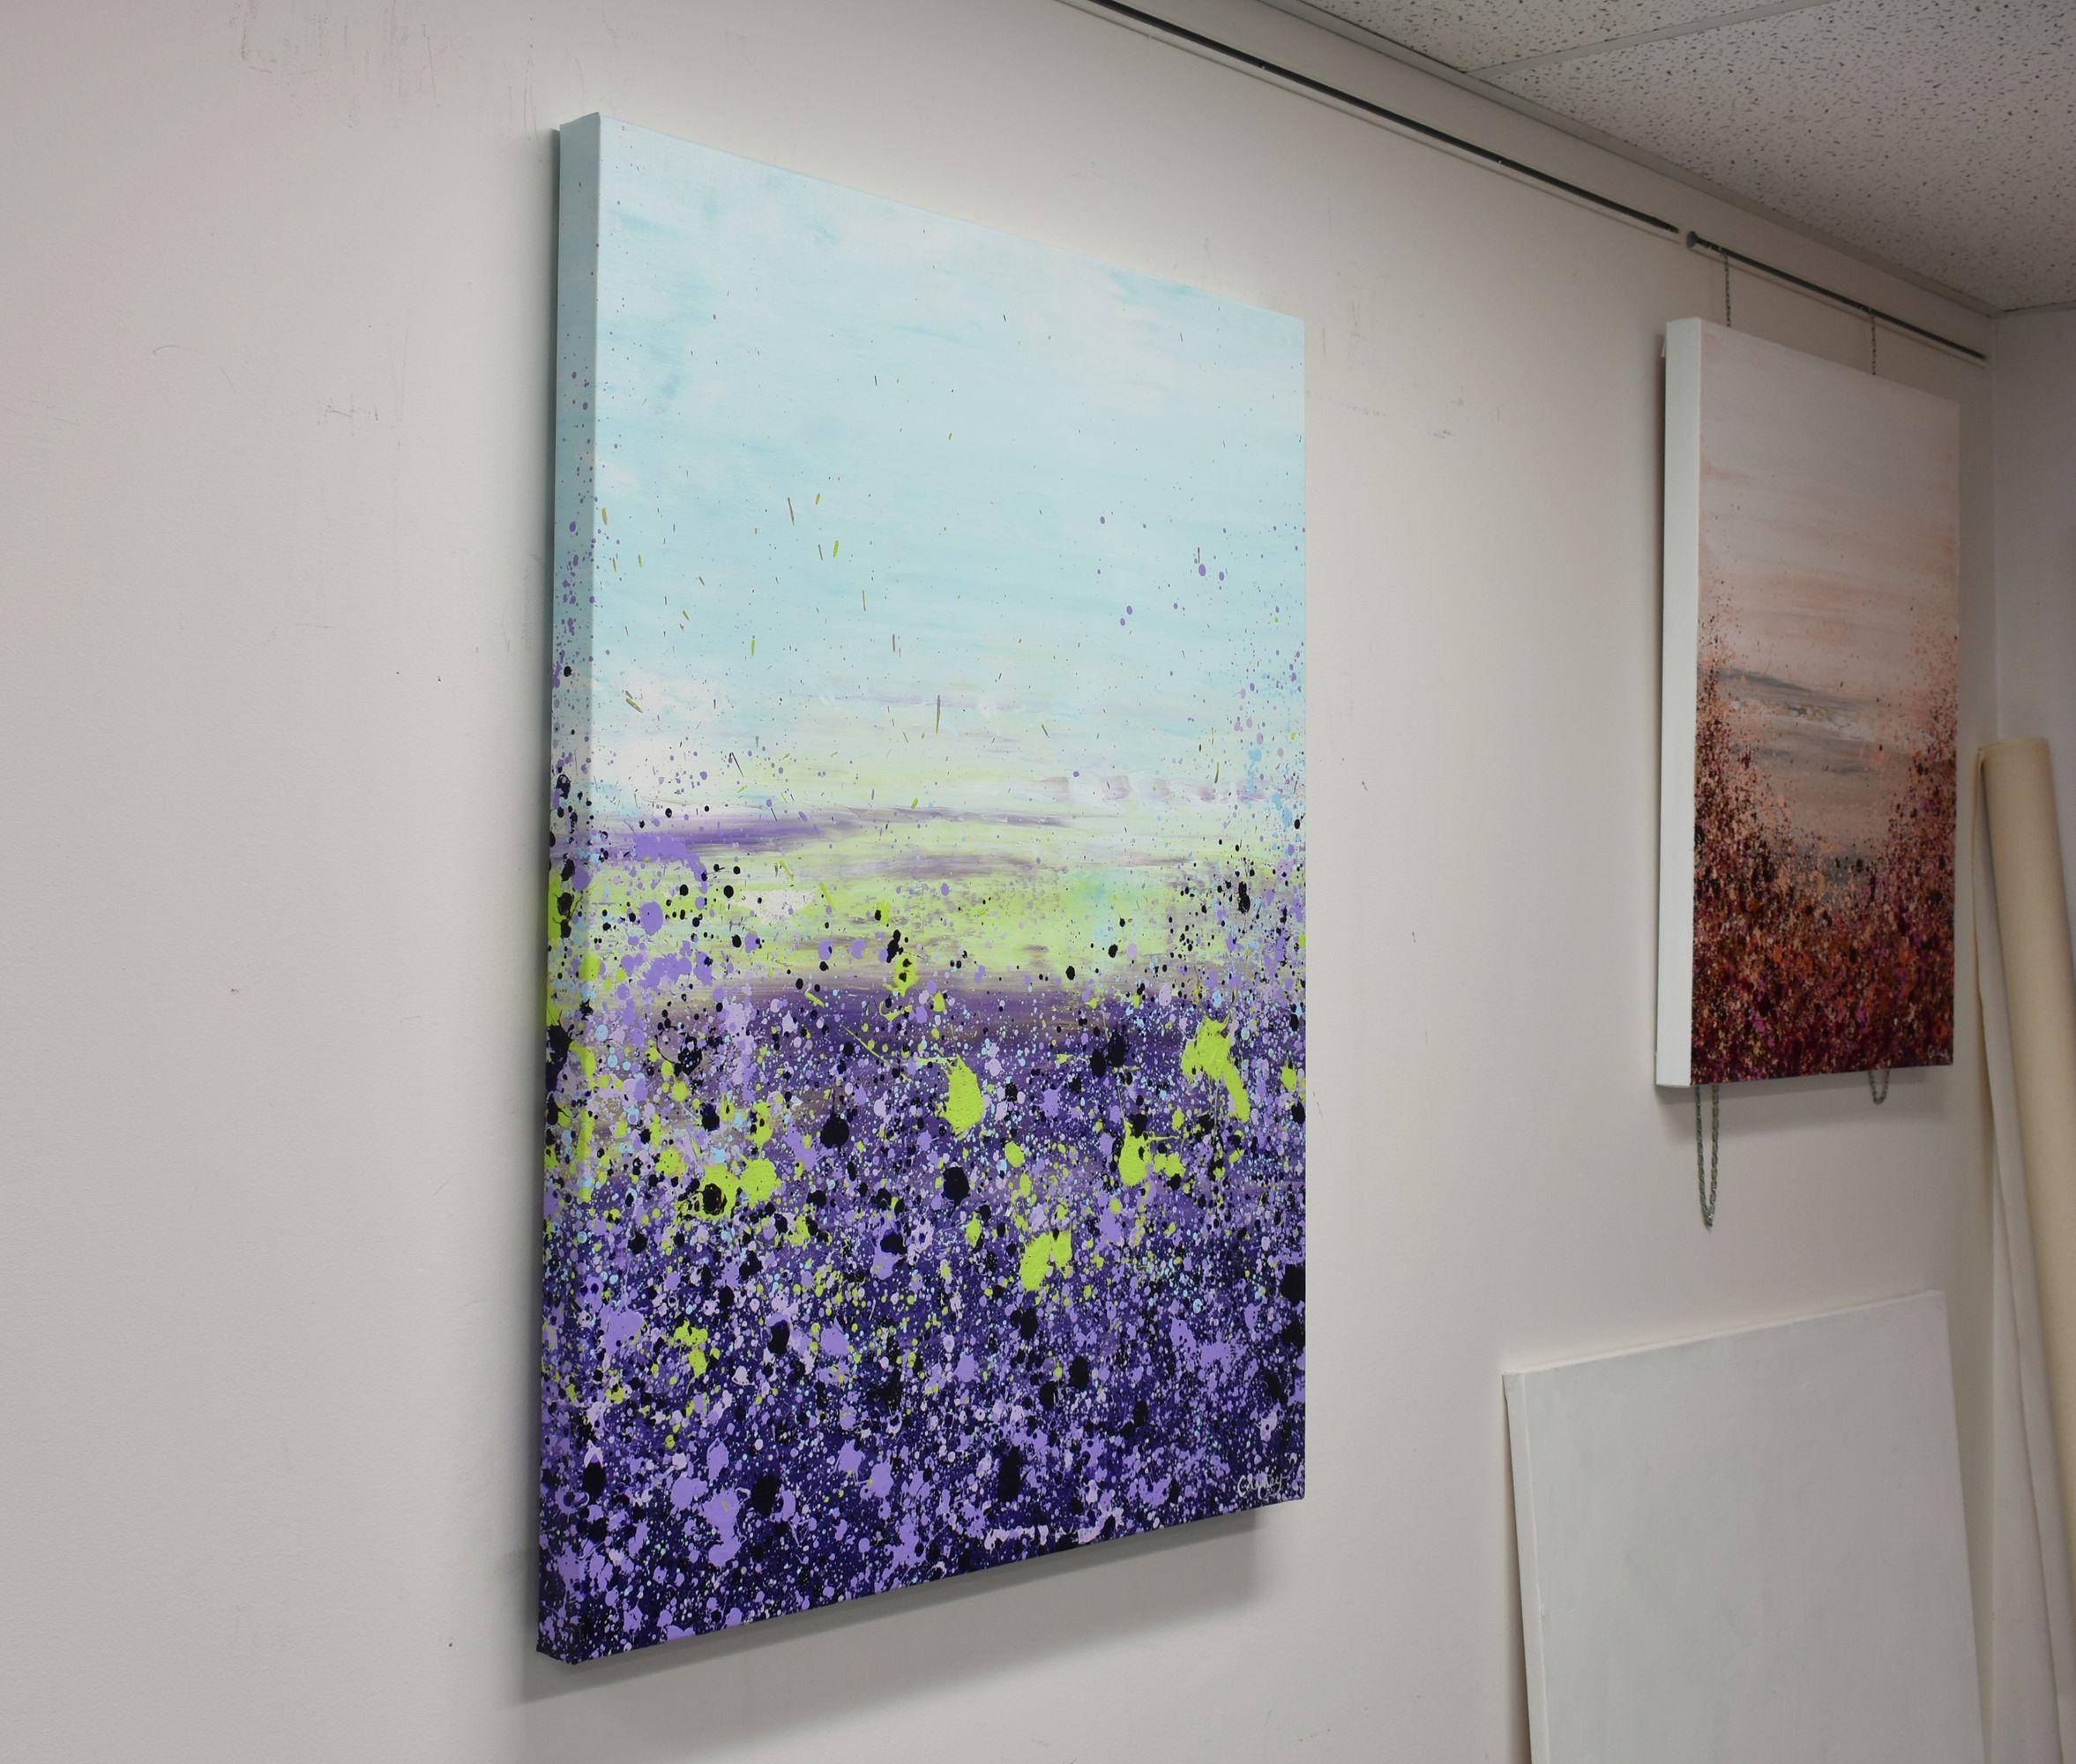 â€œPurple Prairie Cloverâ€ is a floral abstract painting in acrylic on canvas. It was created in beautiful shades of blue, purple and green.    This painting is from the 